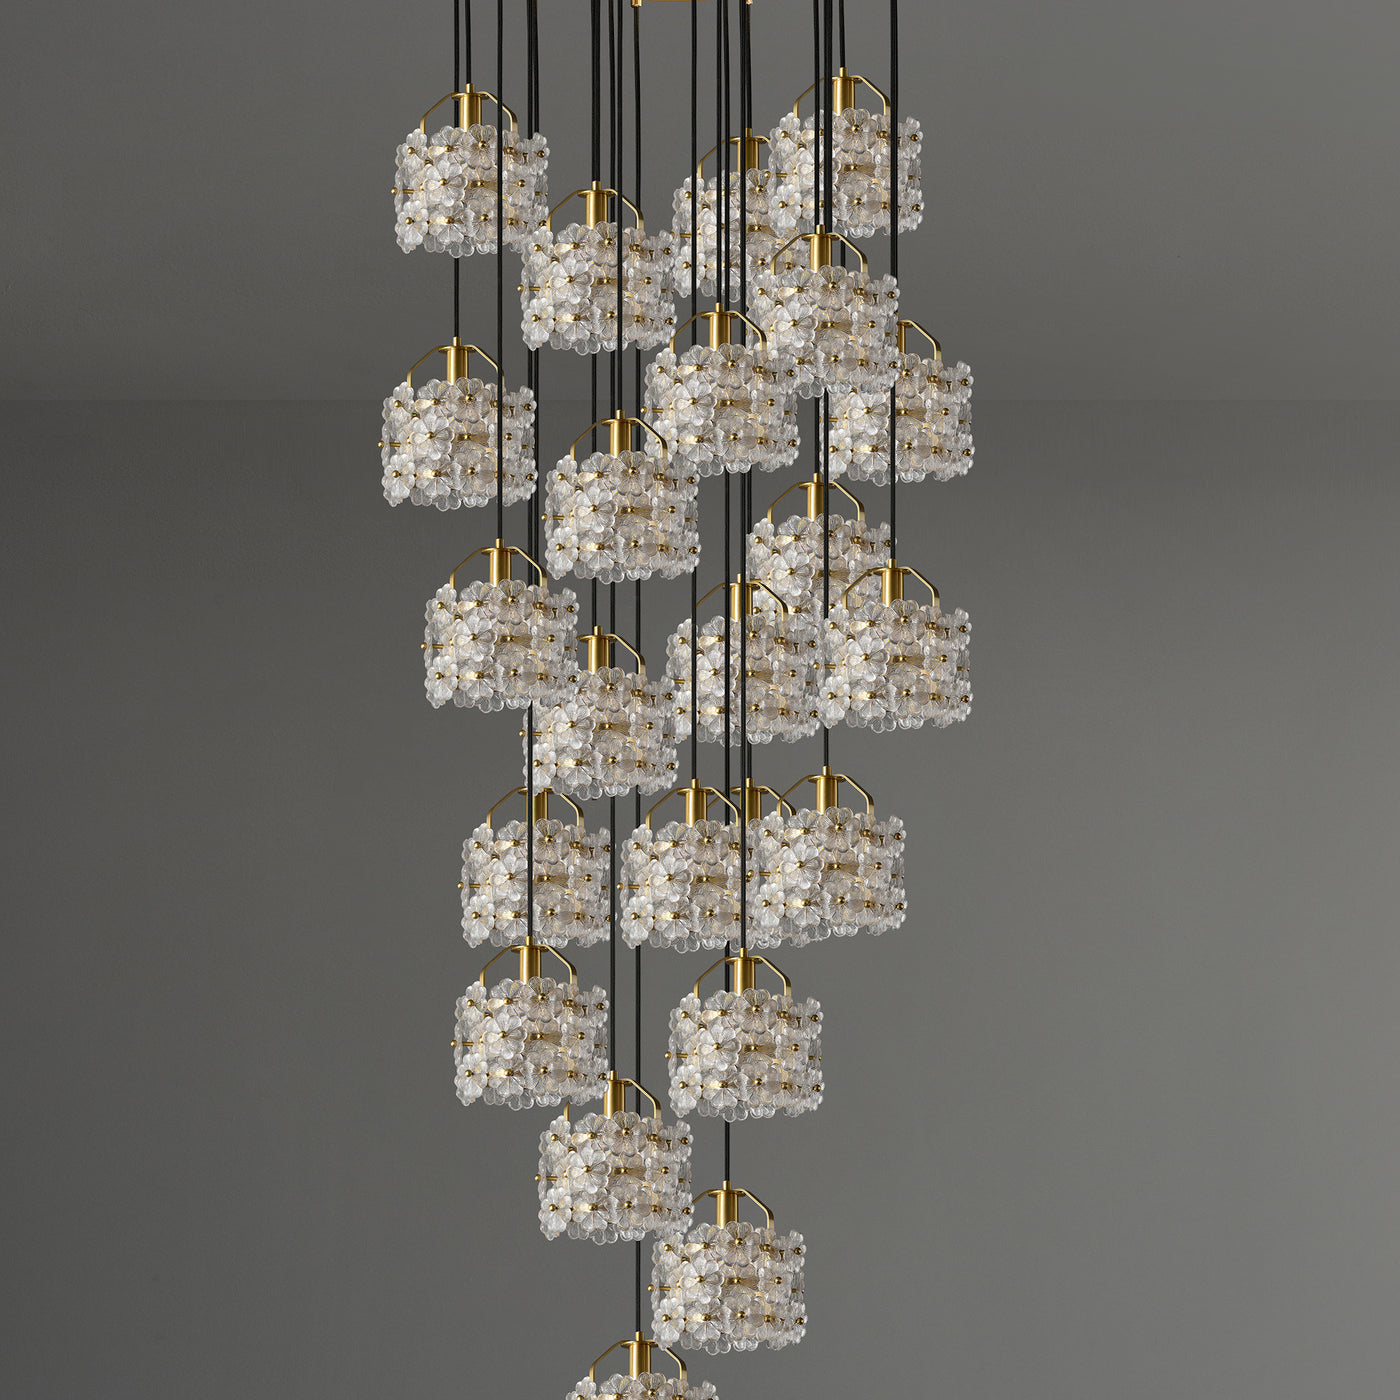 23 Lights Prosperous blooming chandelier